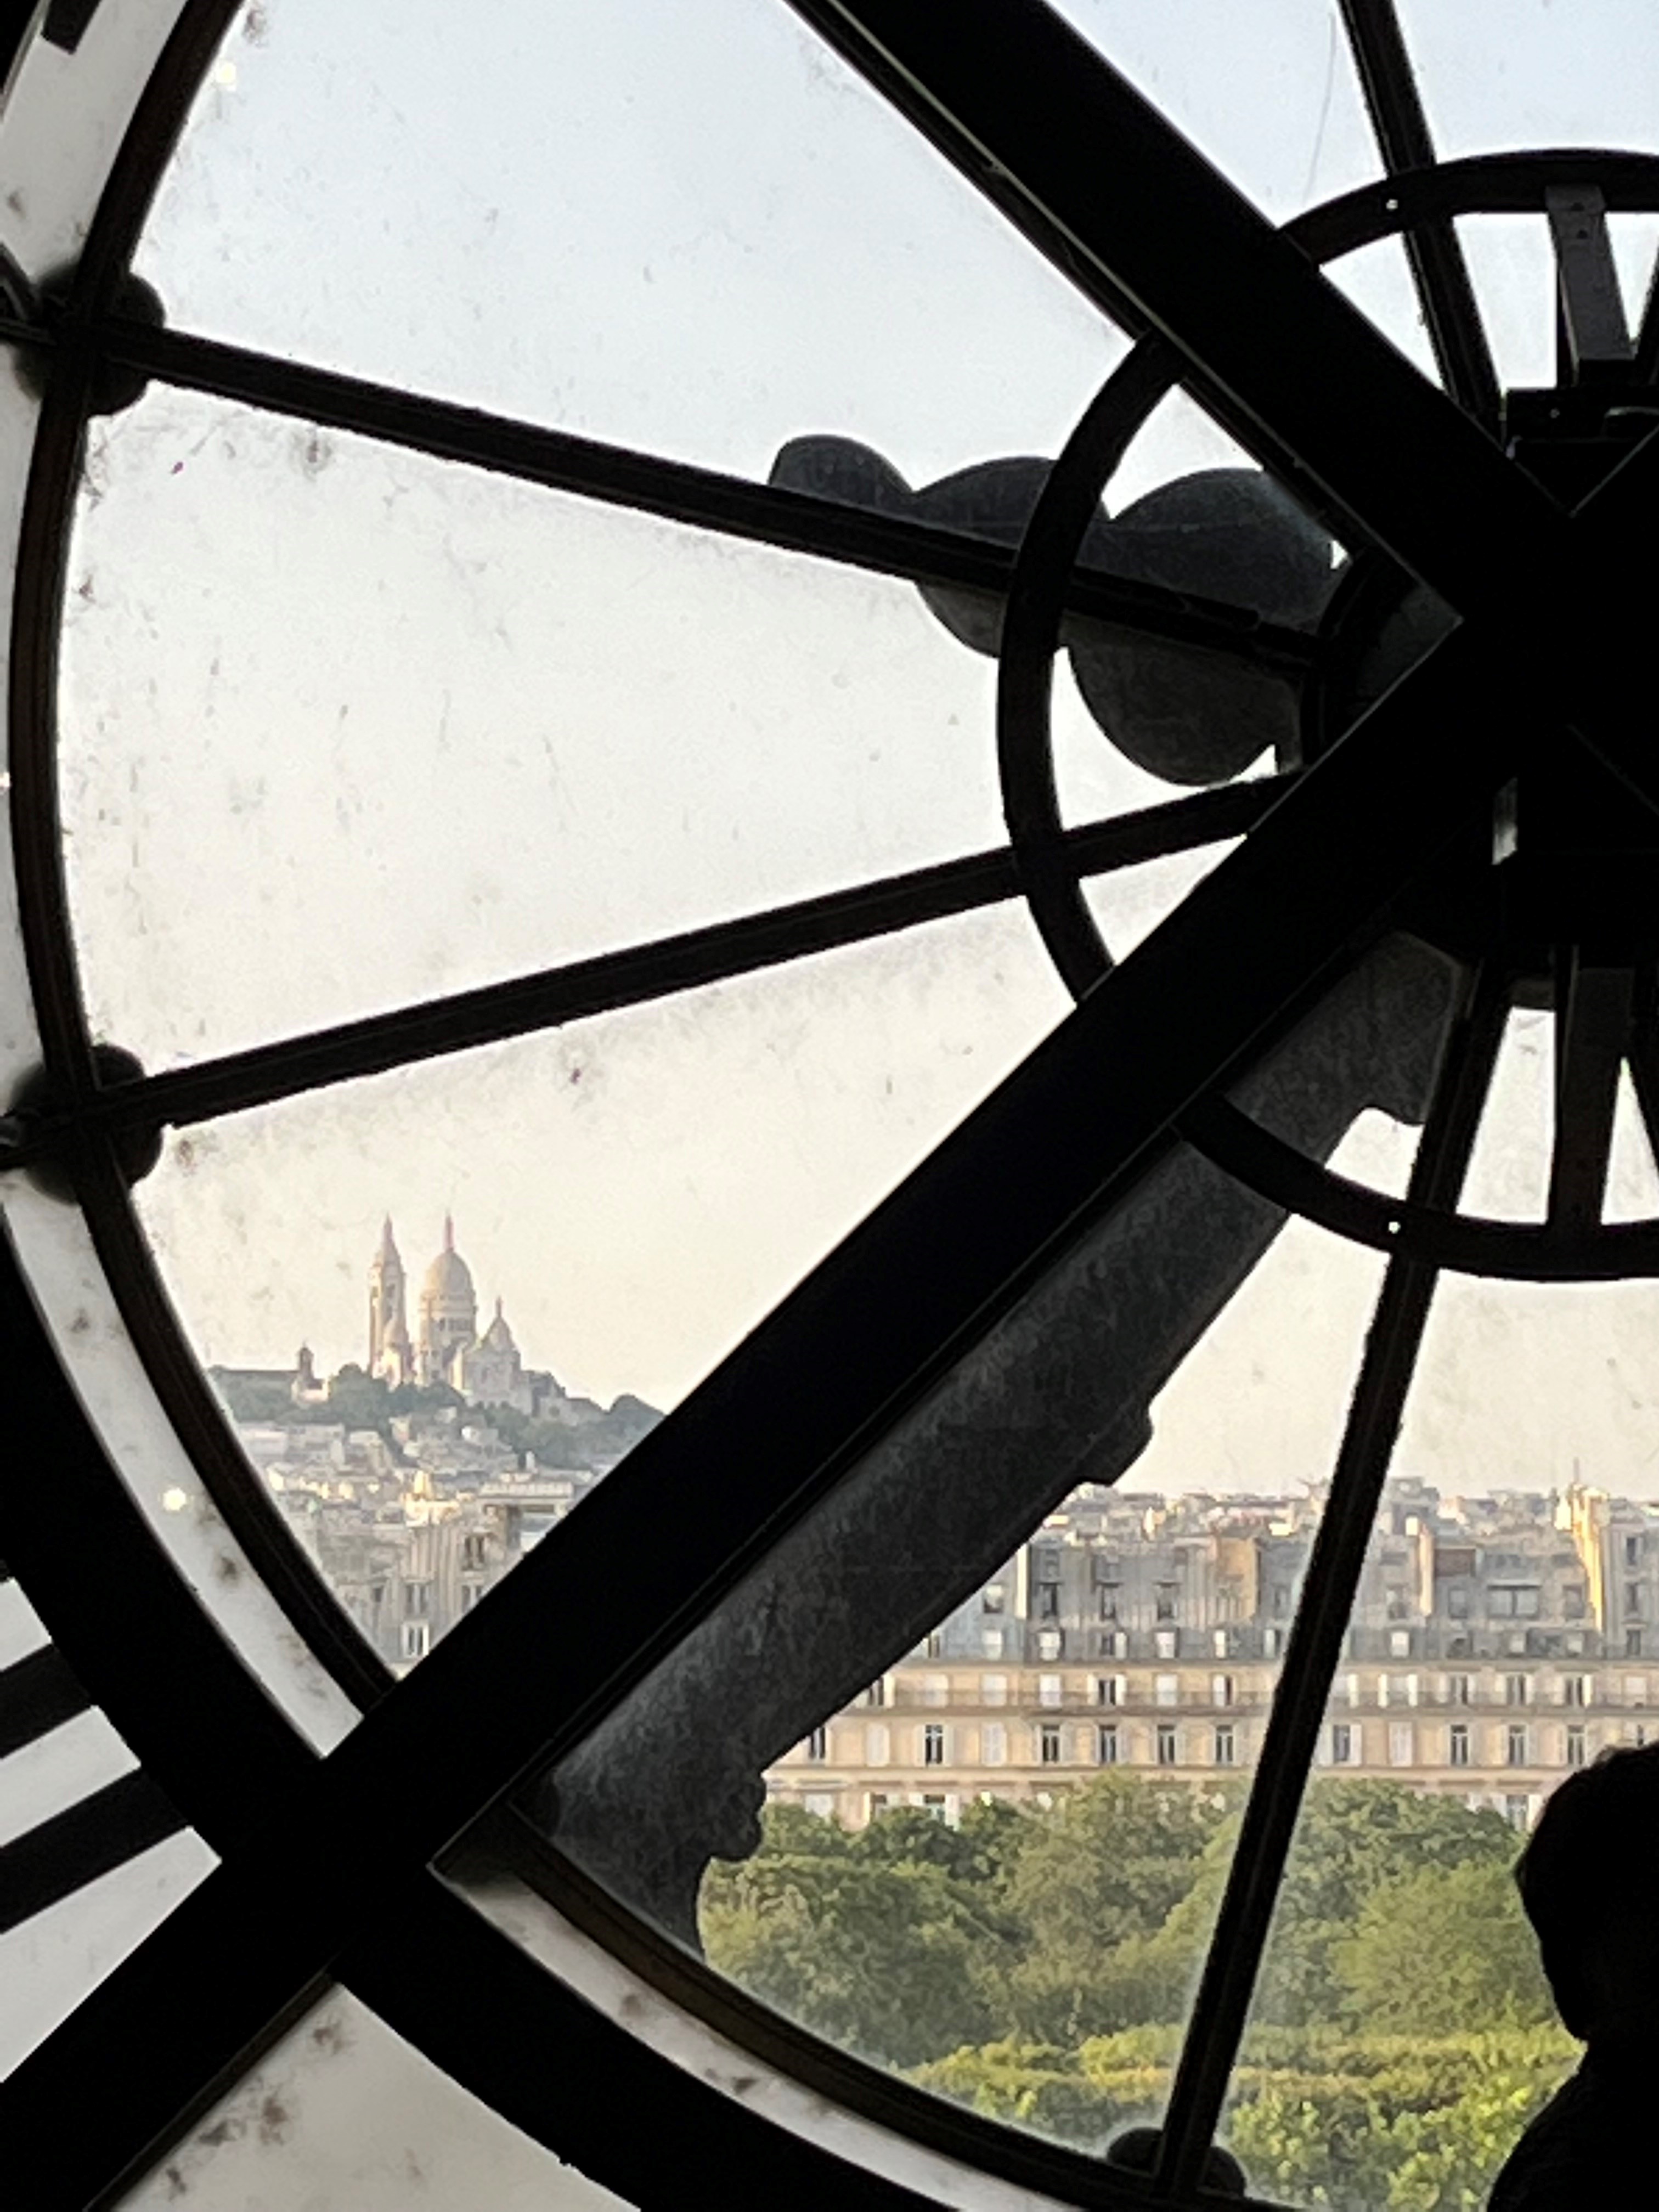 A view of Paris from inside a clocktower